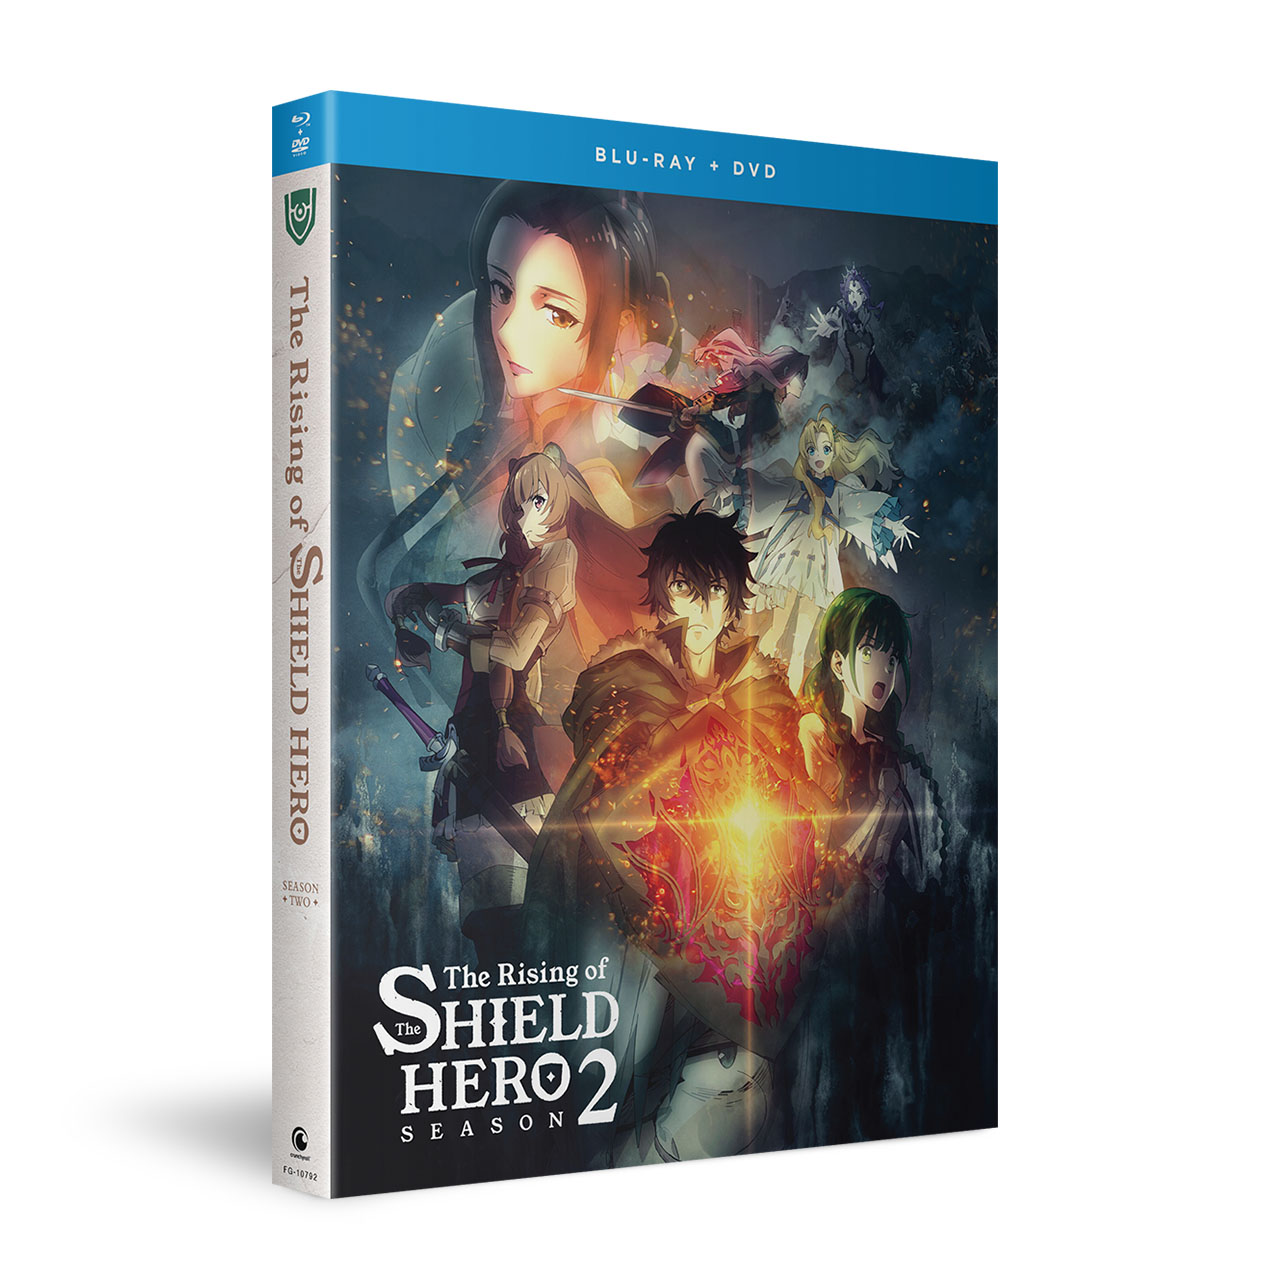 The Rising of the Shield Hero - Season 2 - Blu-ray + DVD image count 2